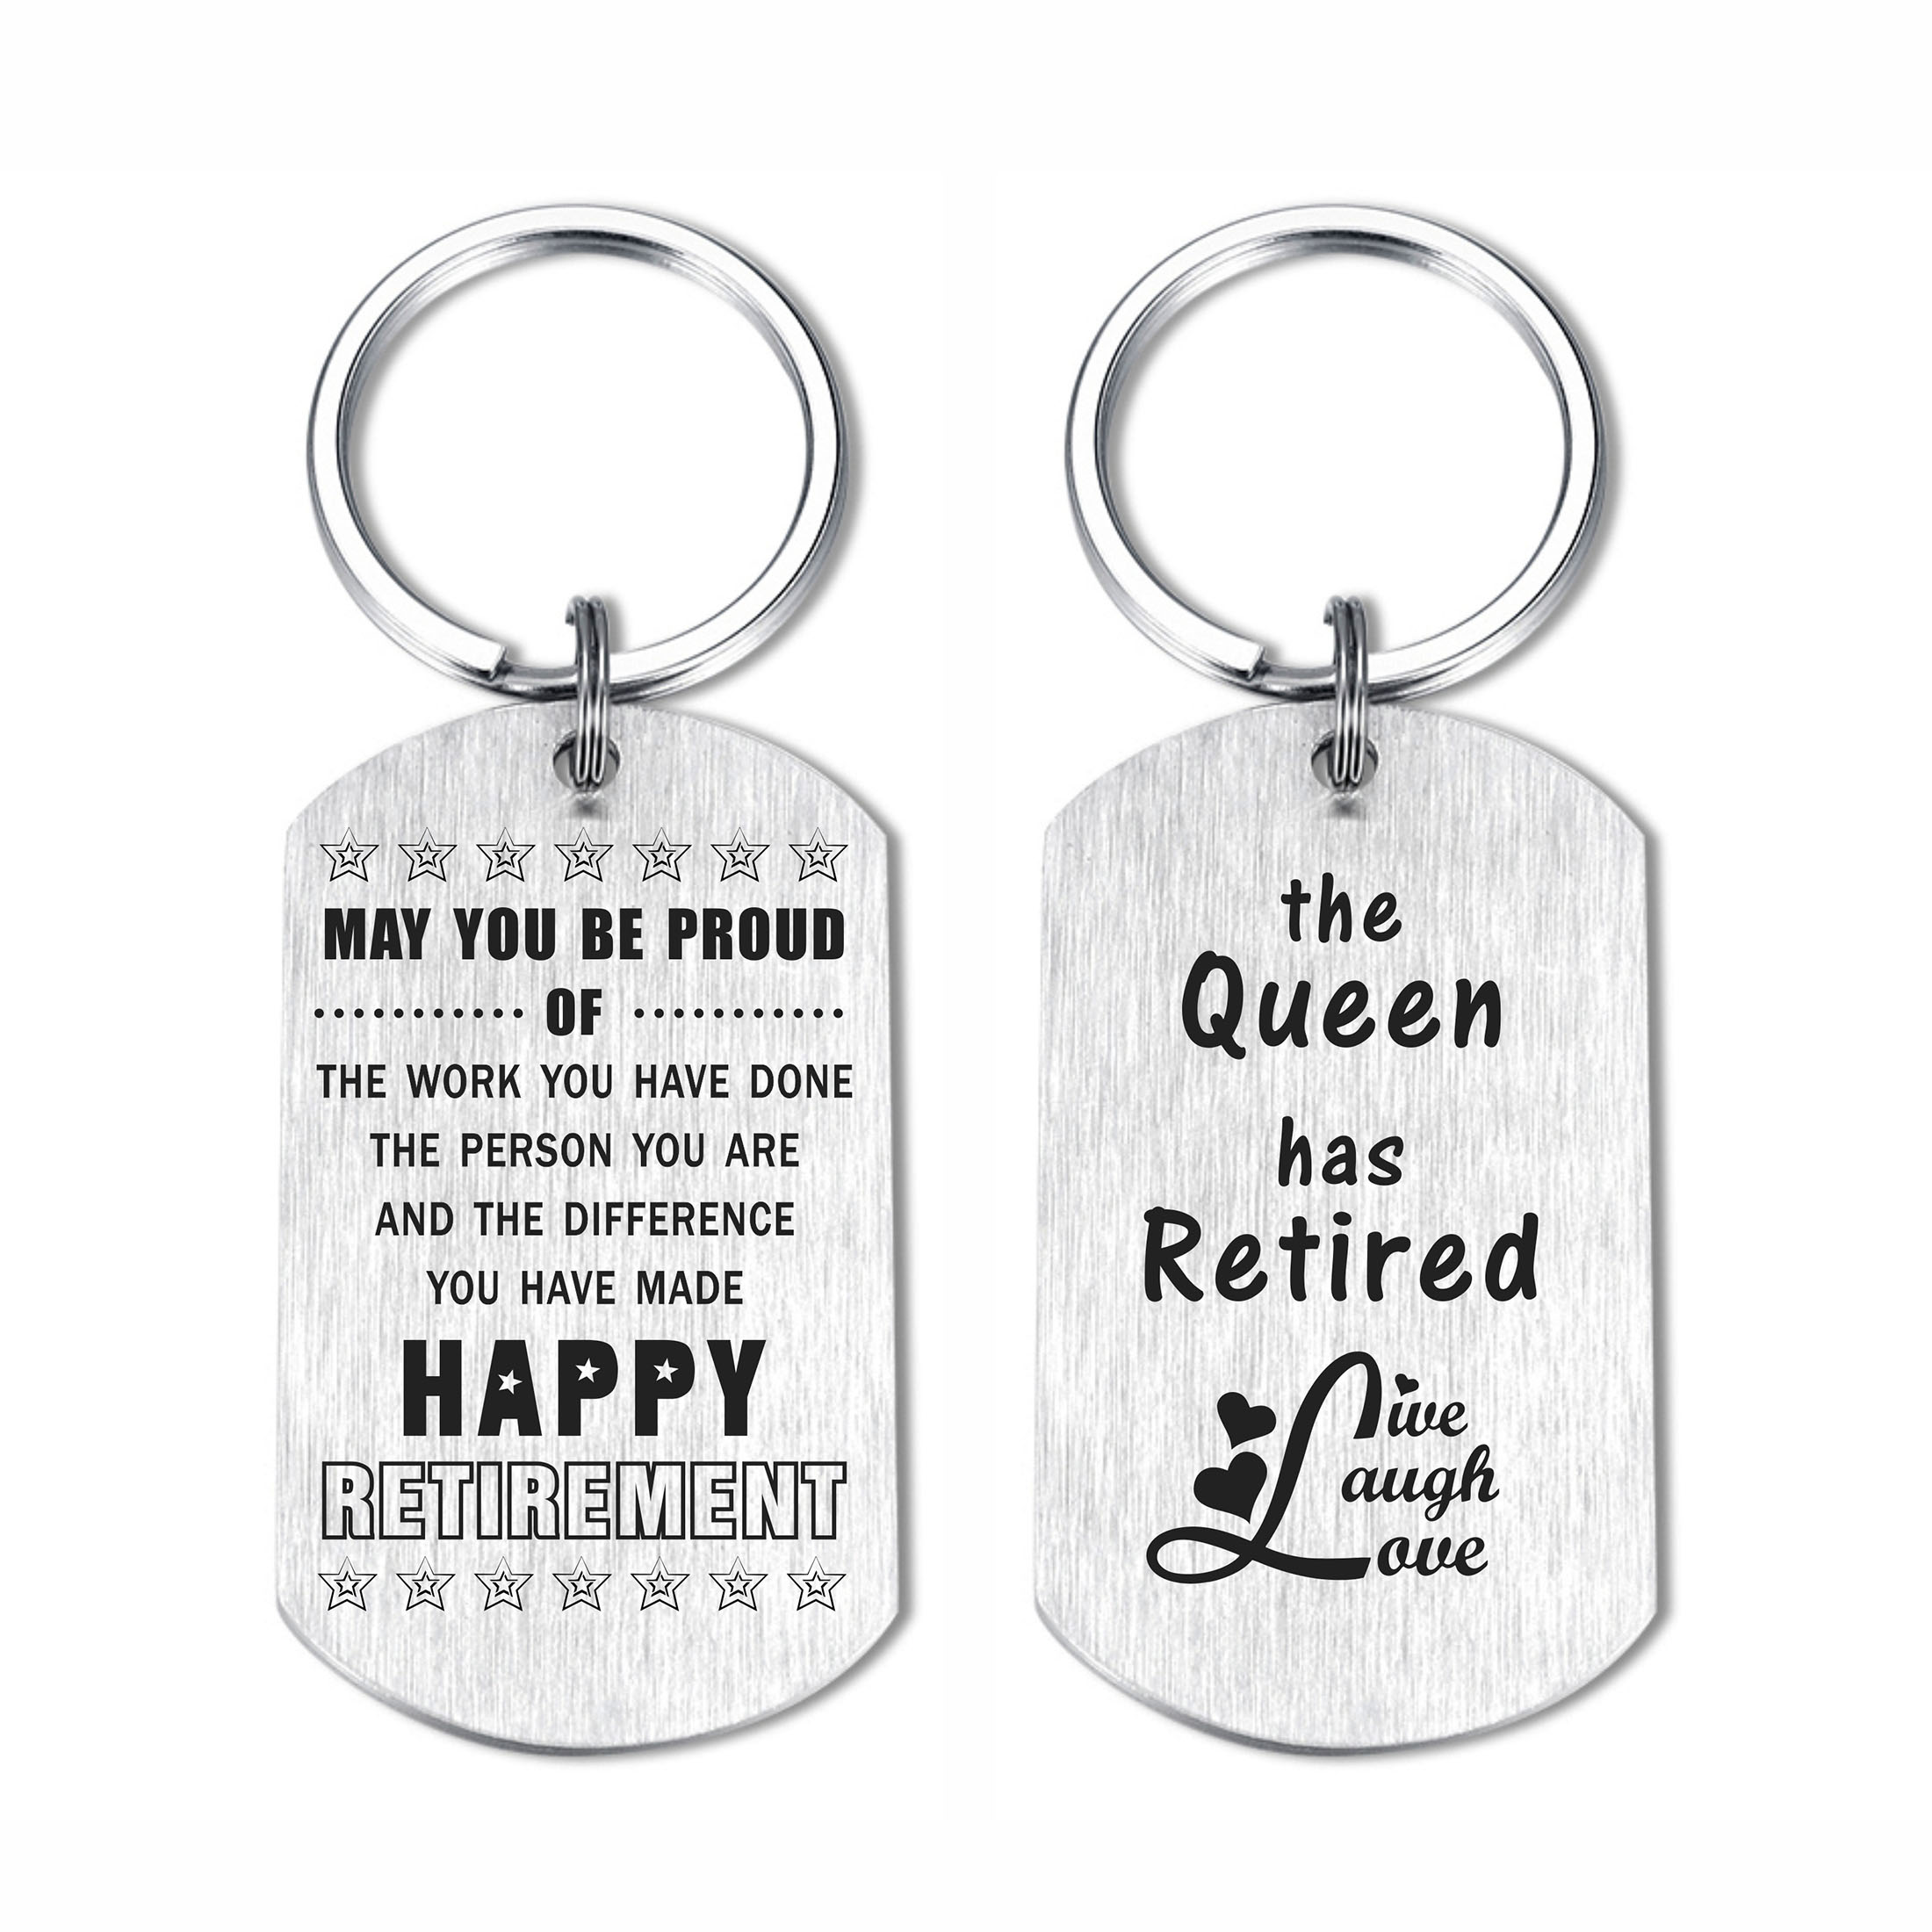 Degasken Retirement Gifts for Women, Happy Retirement, The Queen Has Retired, Metal Engraved Keychain - image 1 of 5